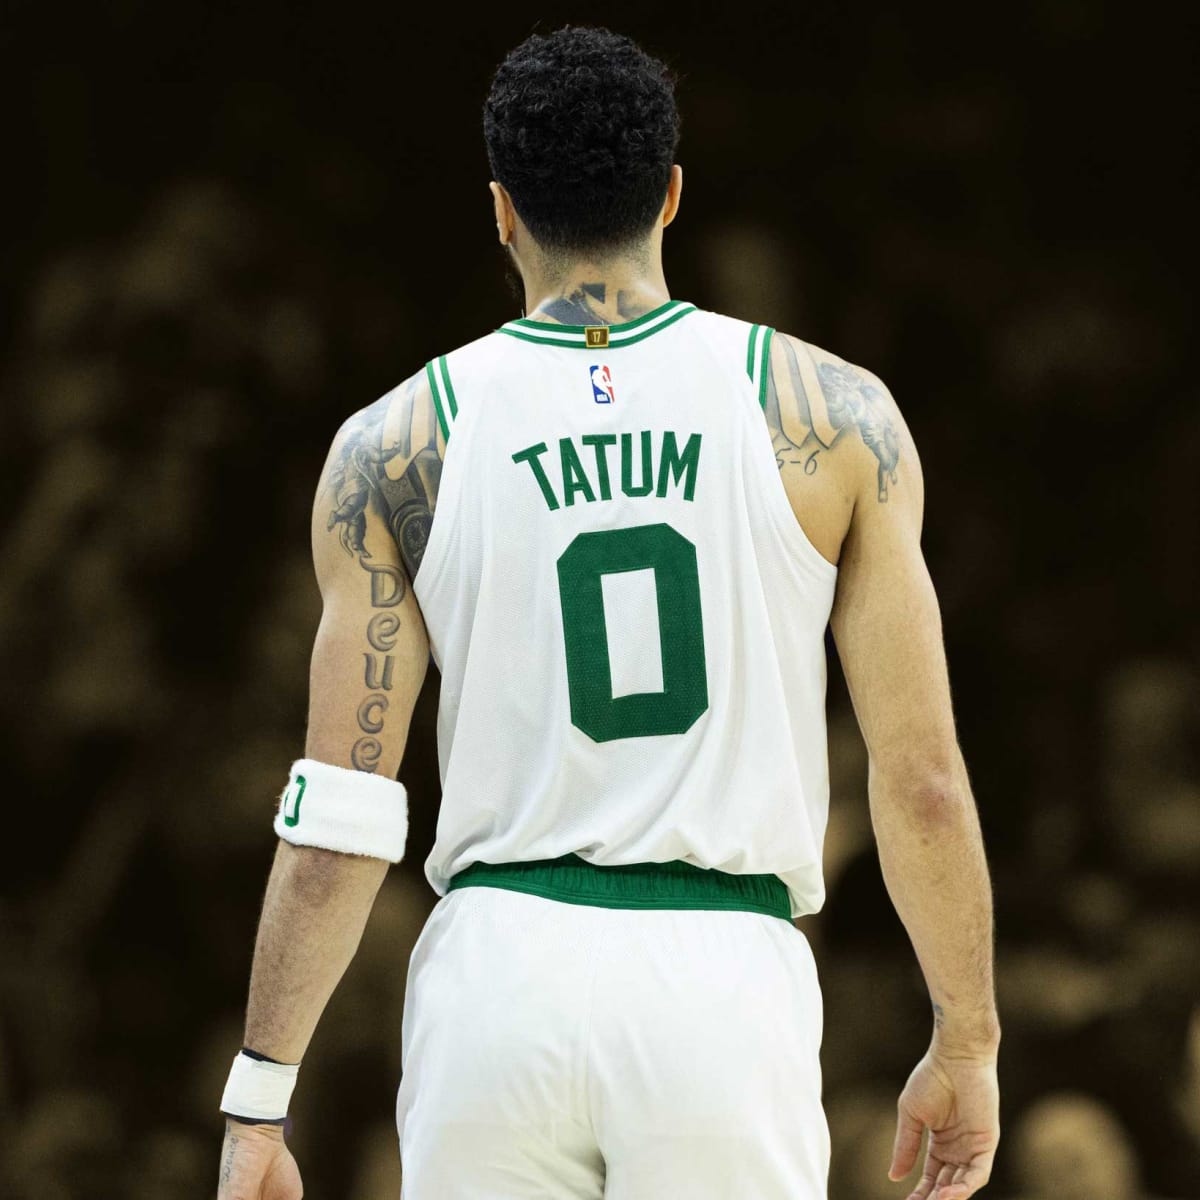 Taking a closer look at the Boston Celtics' 75th anniversary